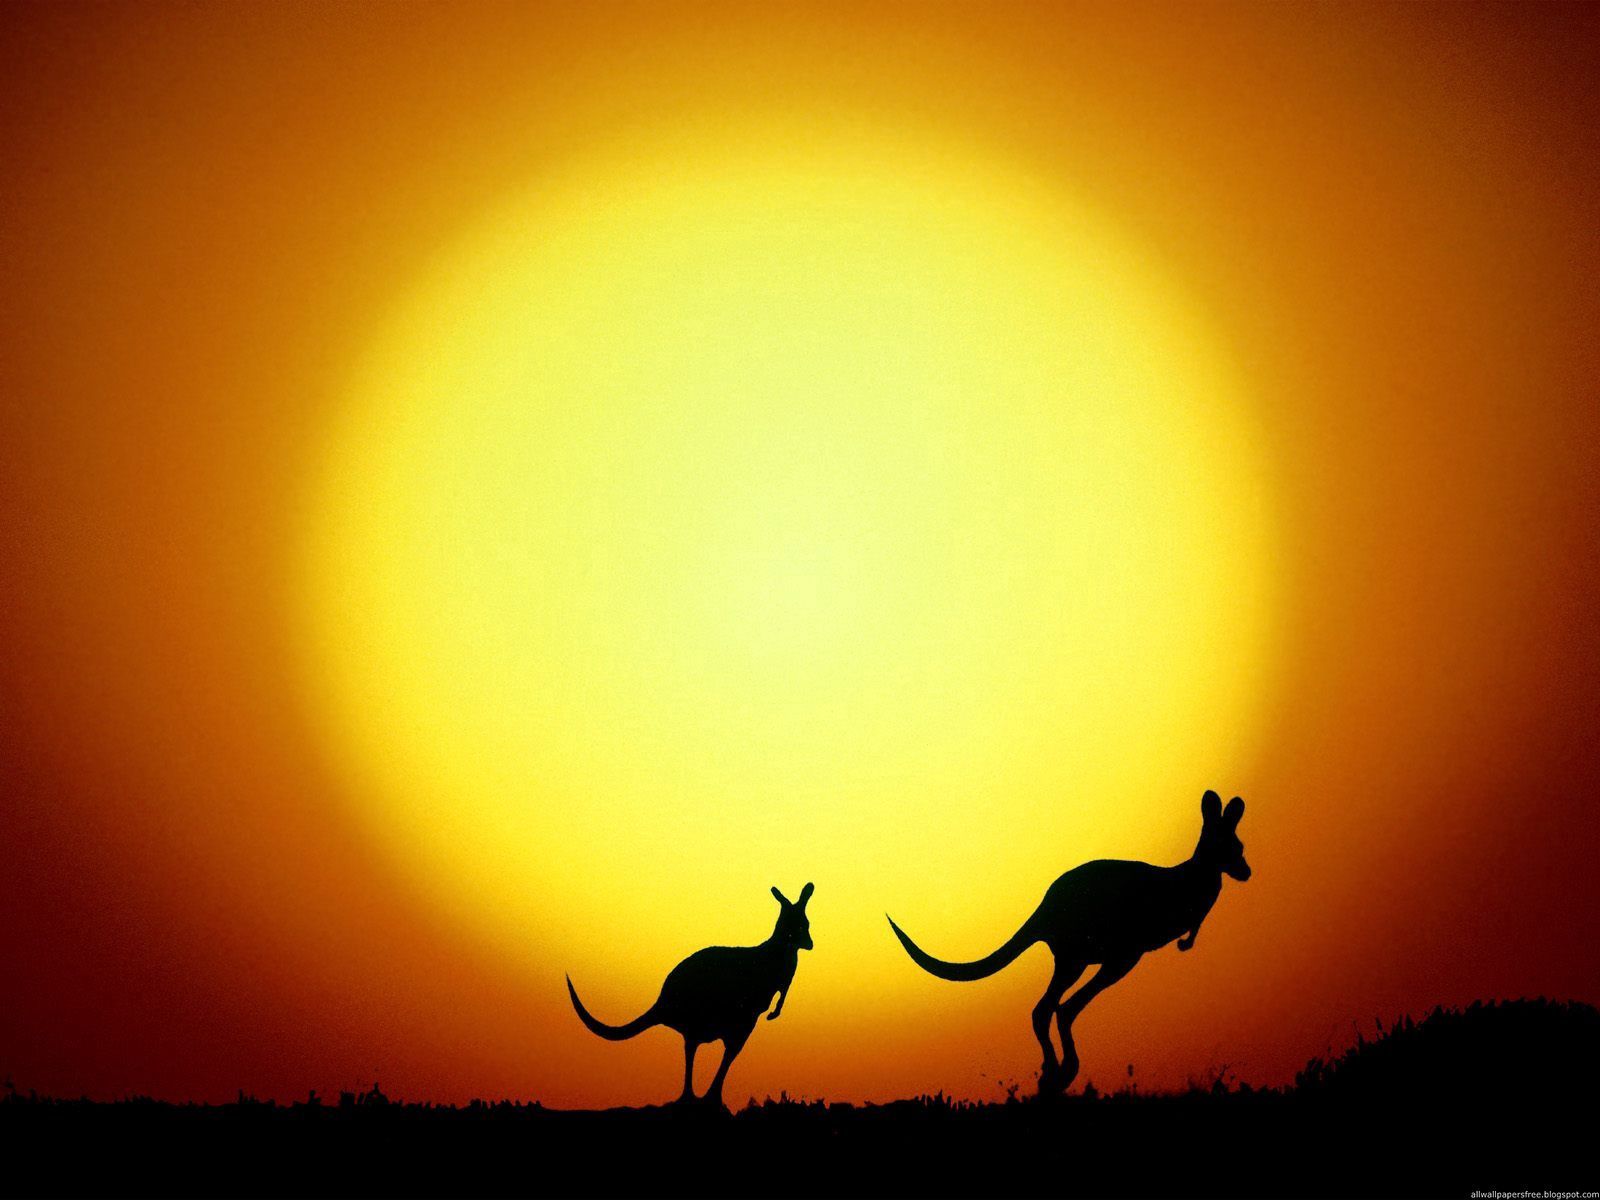 Cool Backgrounds evening, sunset, silhouettes, kangaroo Australia